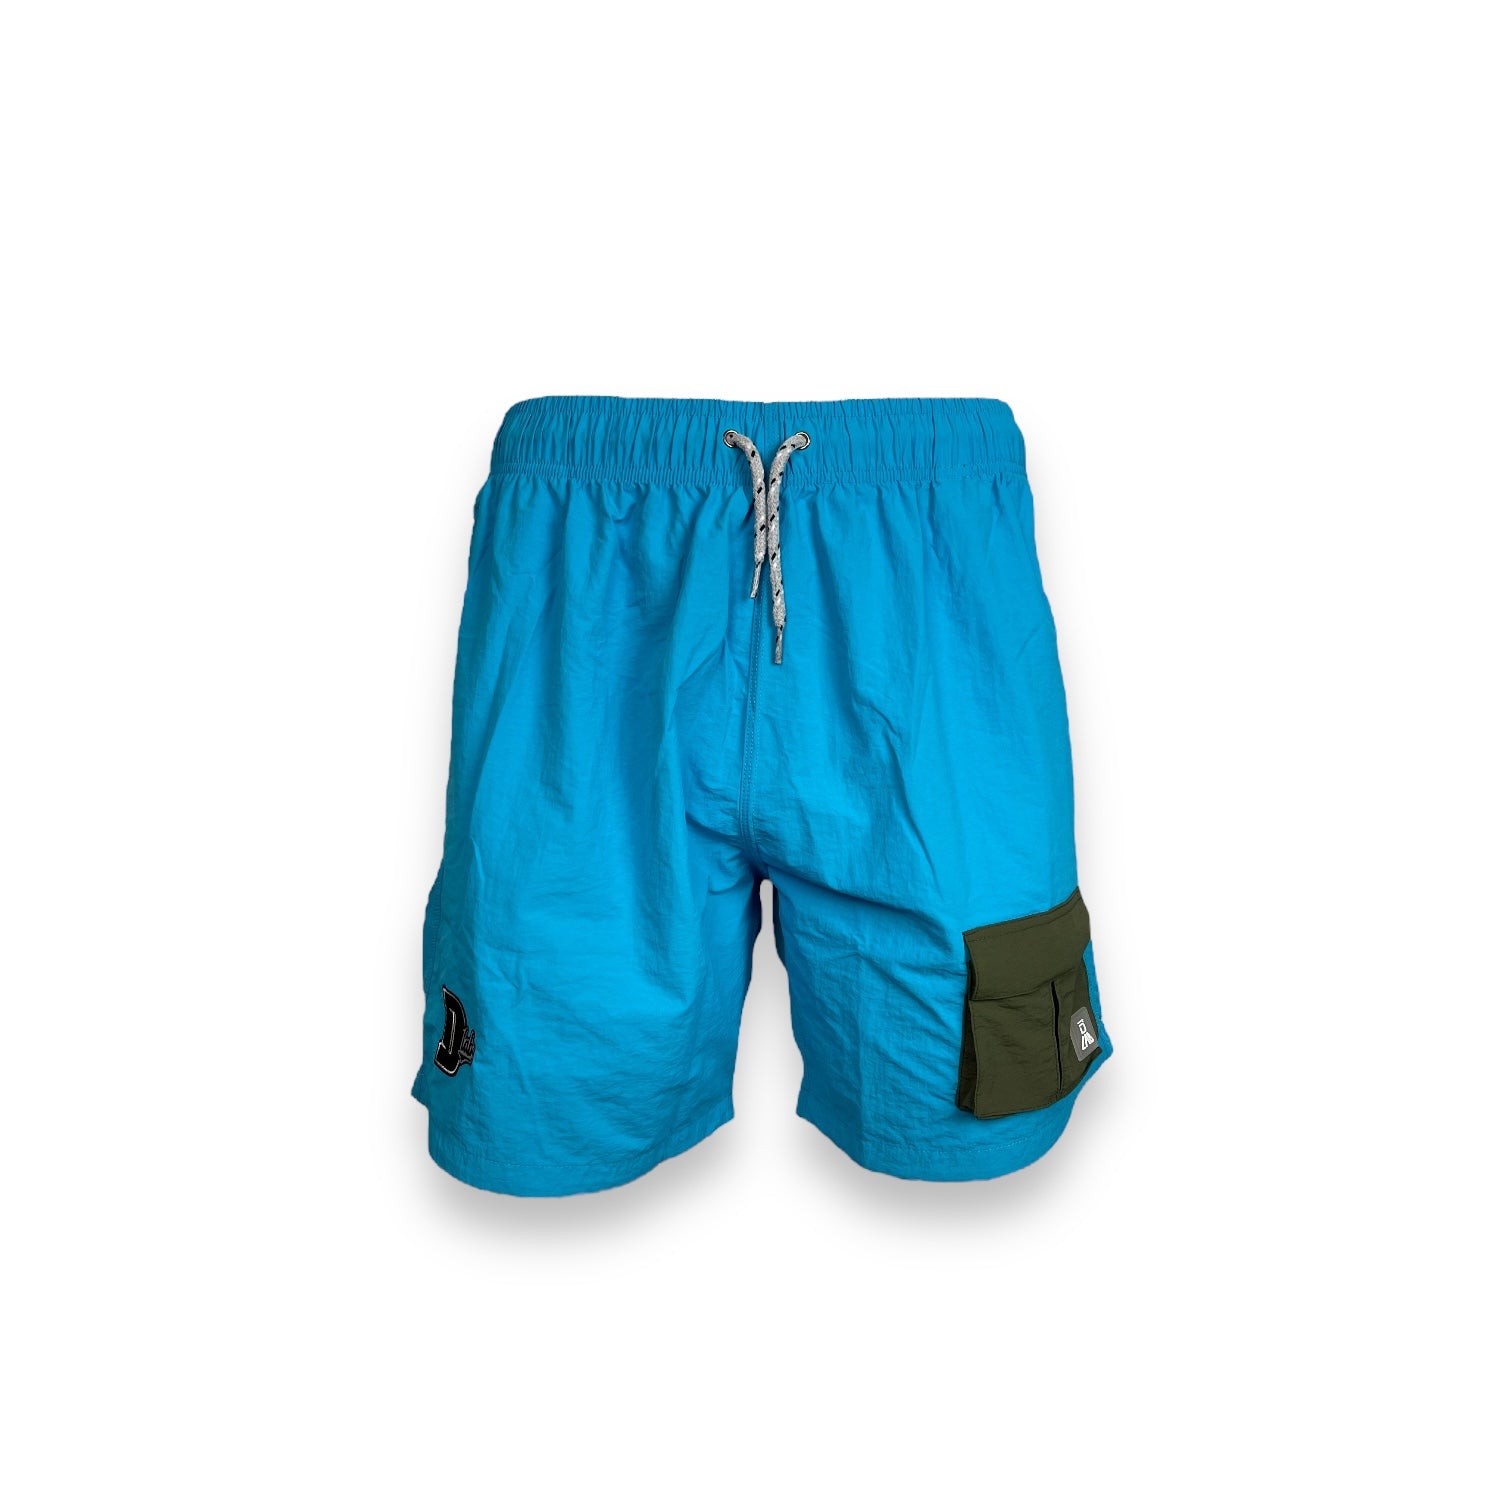 DLAB Hybrid Shorts Blue with Dark Green Pocket